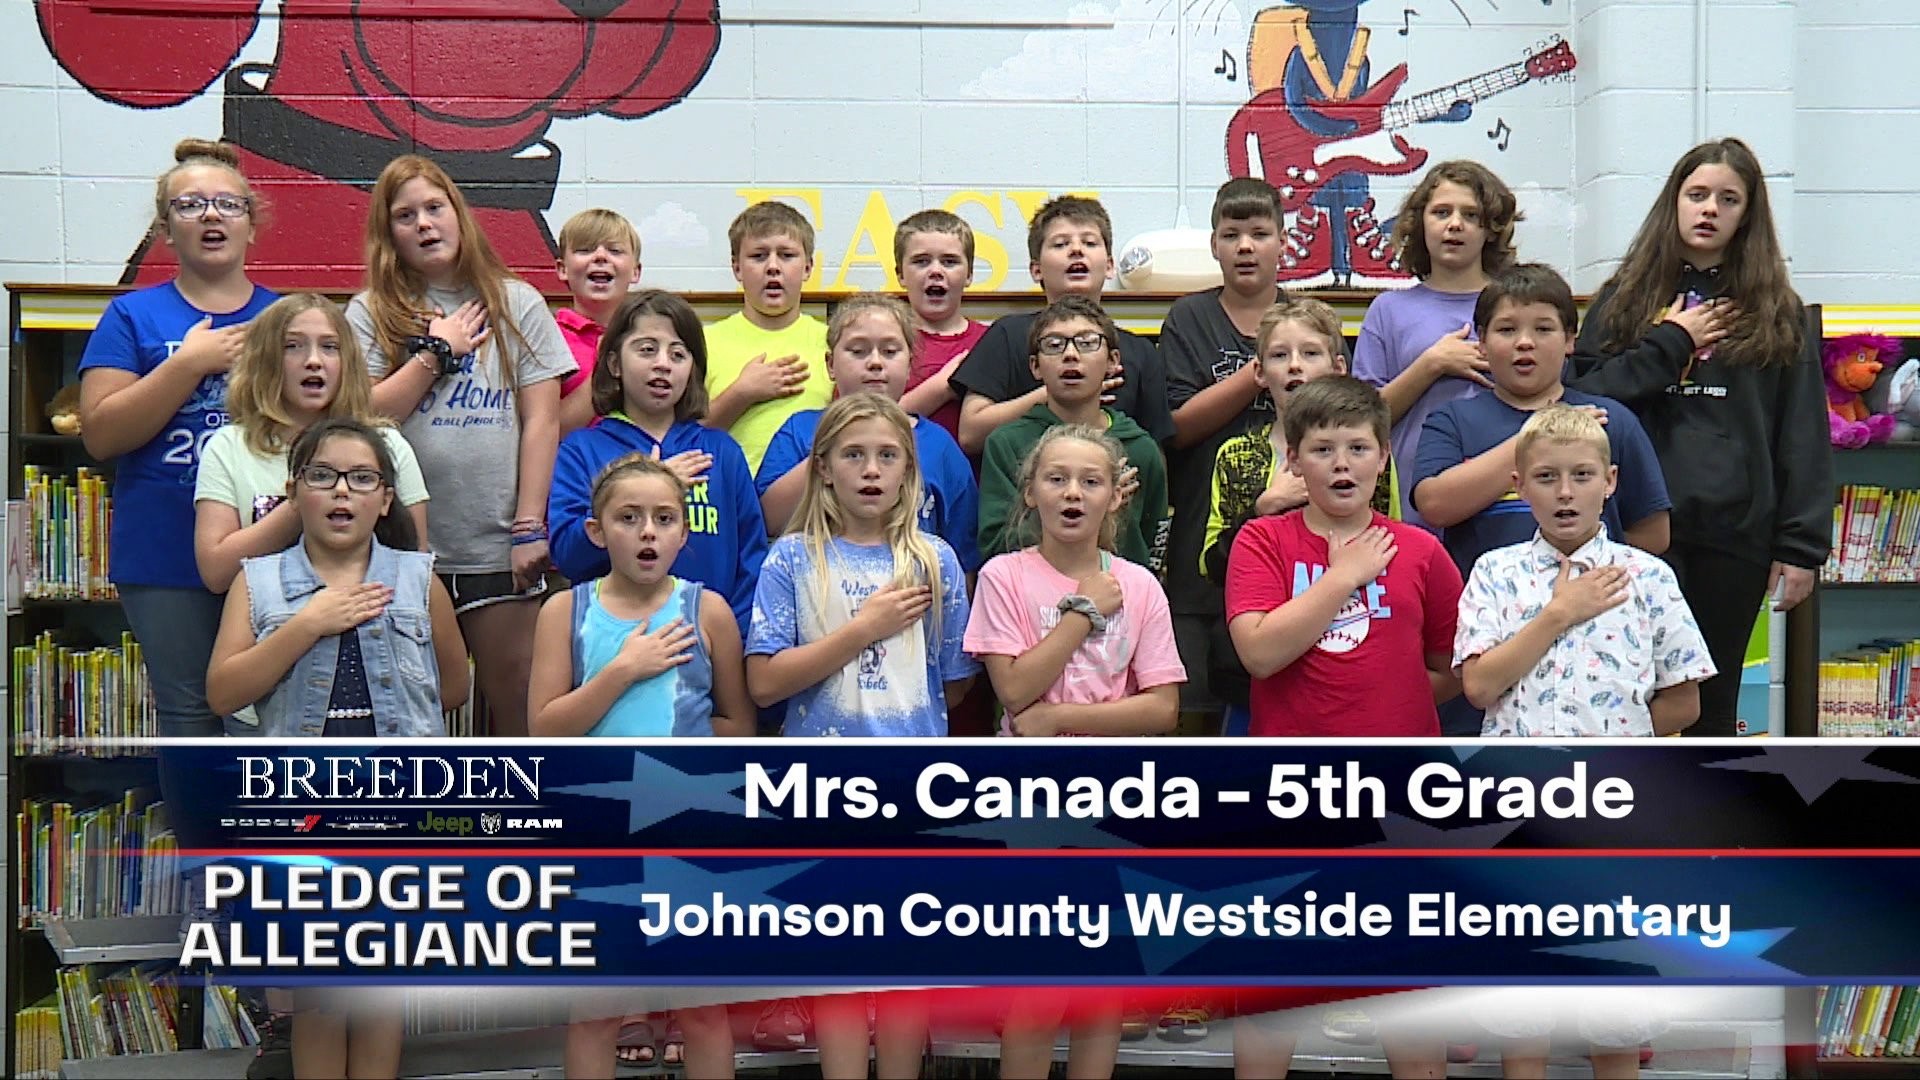 Mrs. Canada 5th Grade Johnson County Westside Elementary